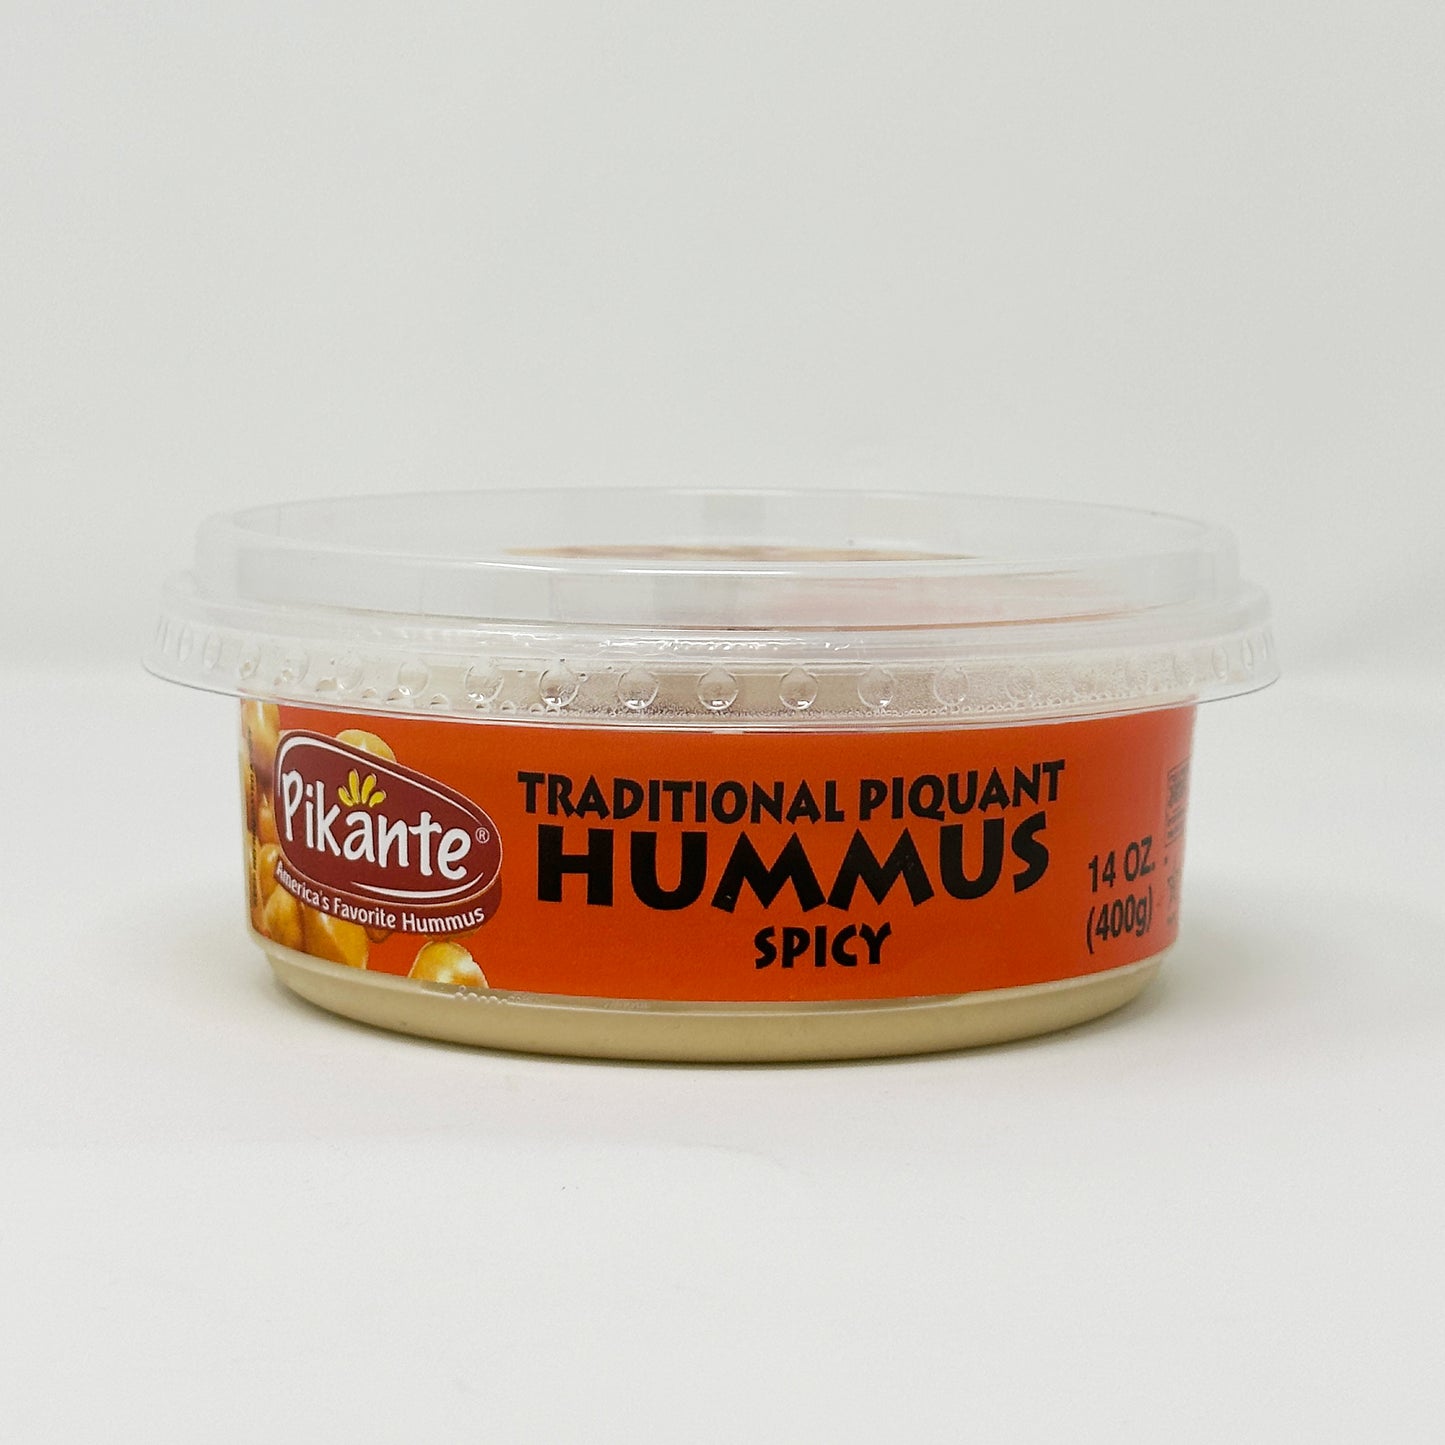 Pikante Hummus Piquant 14 oz